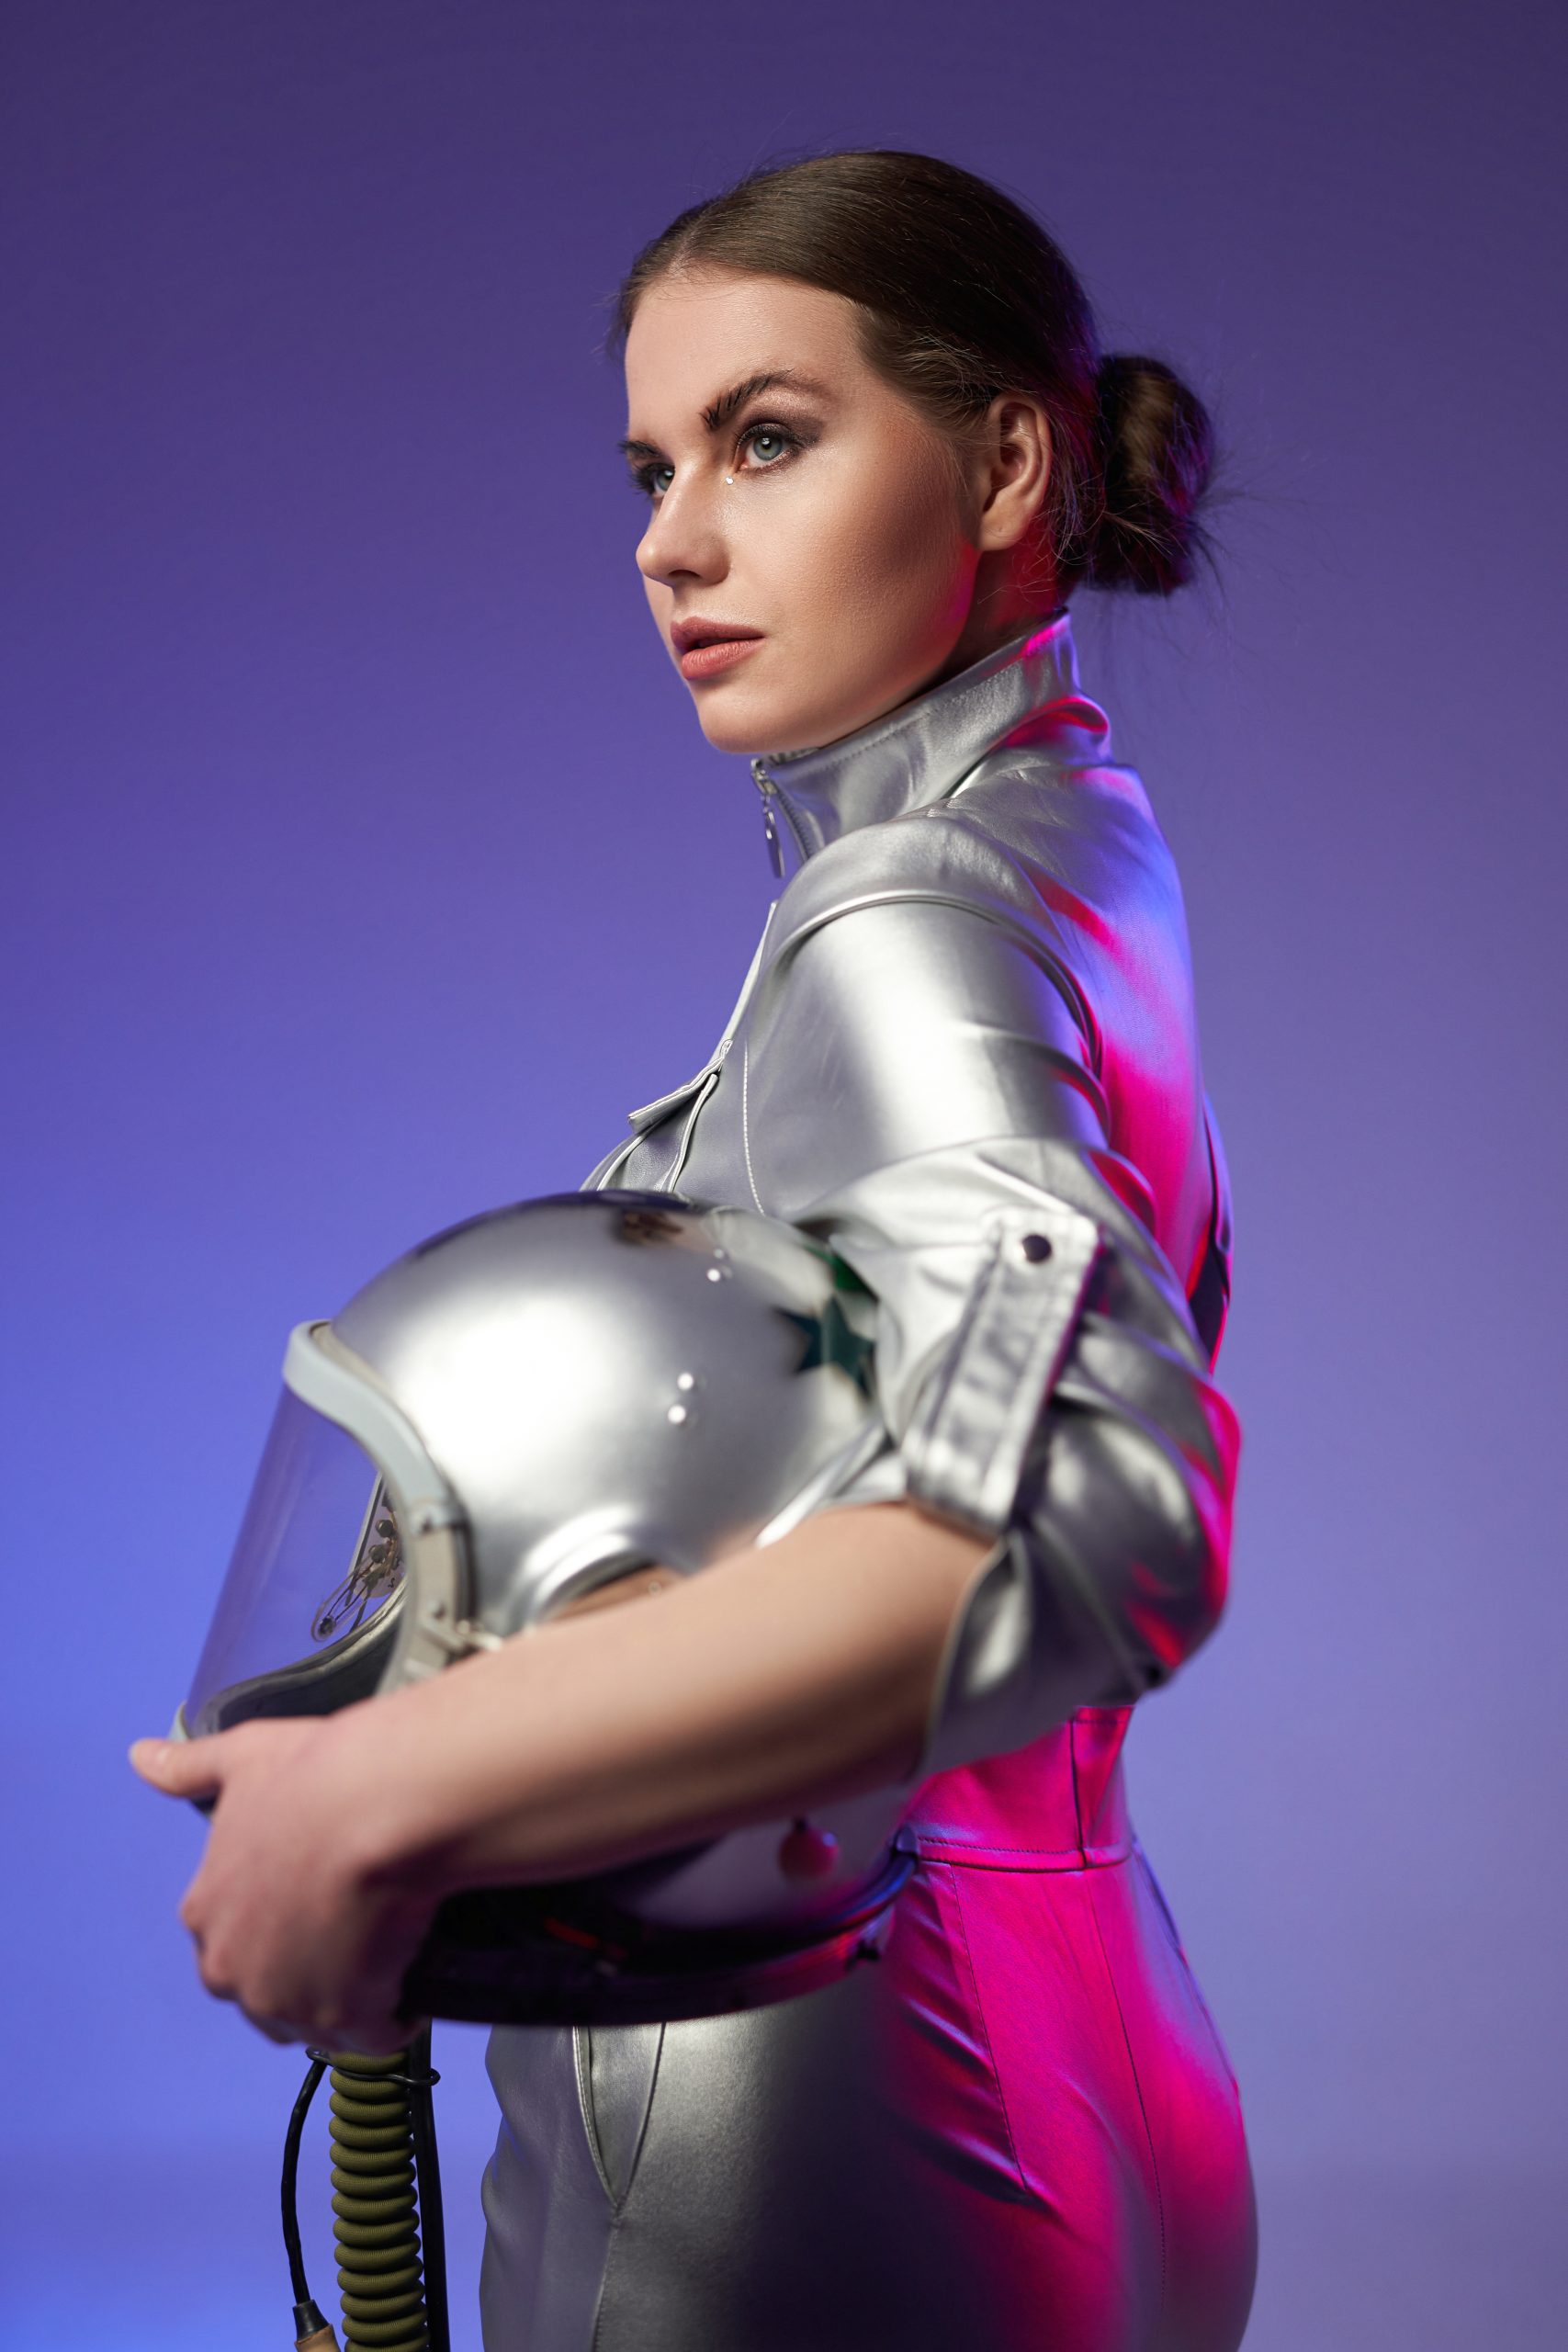 back-view-of-woman-astronaut-with-helmet-2021-09-02-19-28-58-utc-scaled.jpg